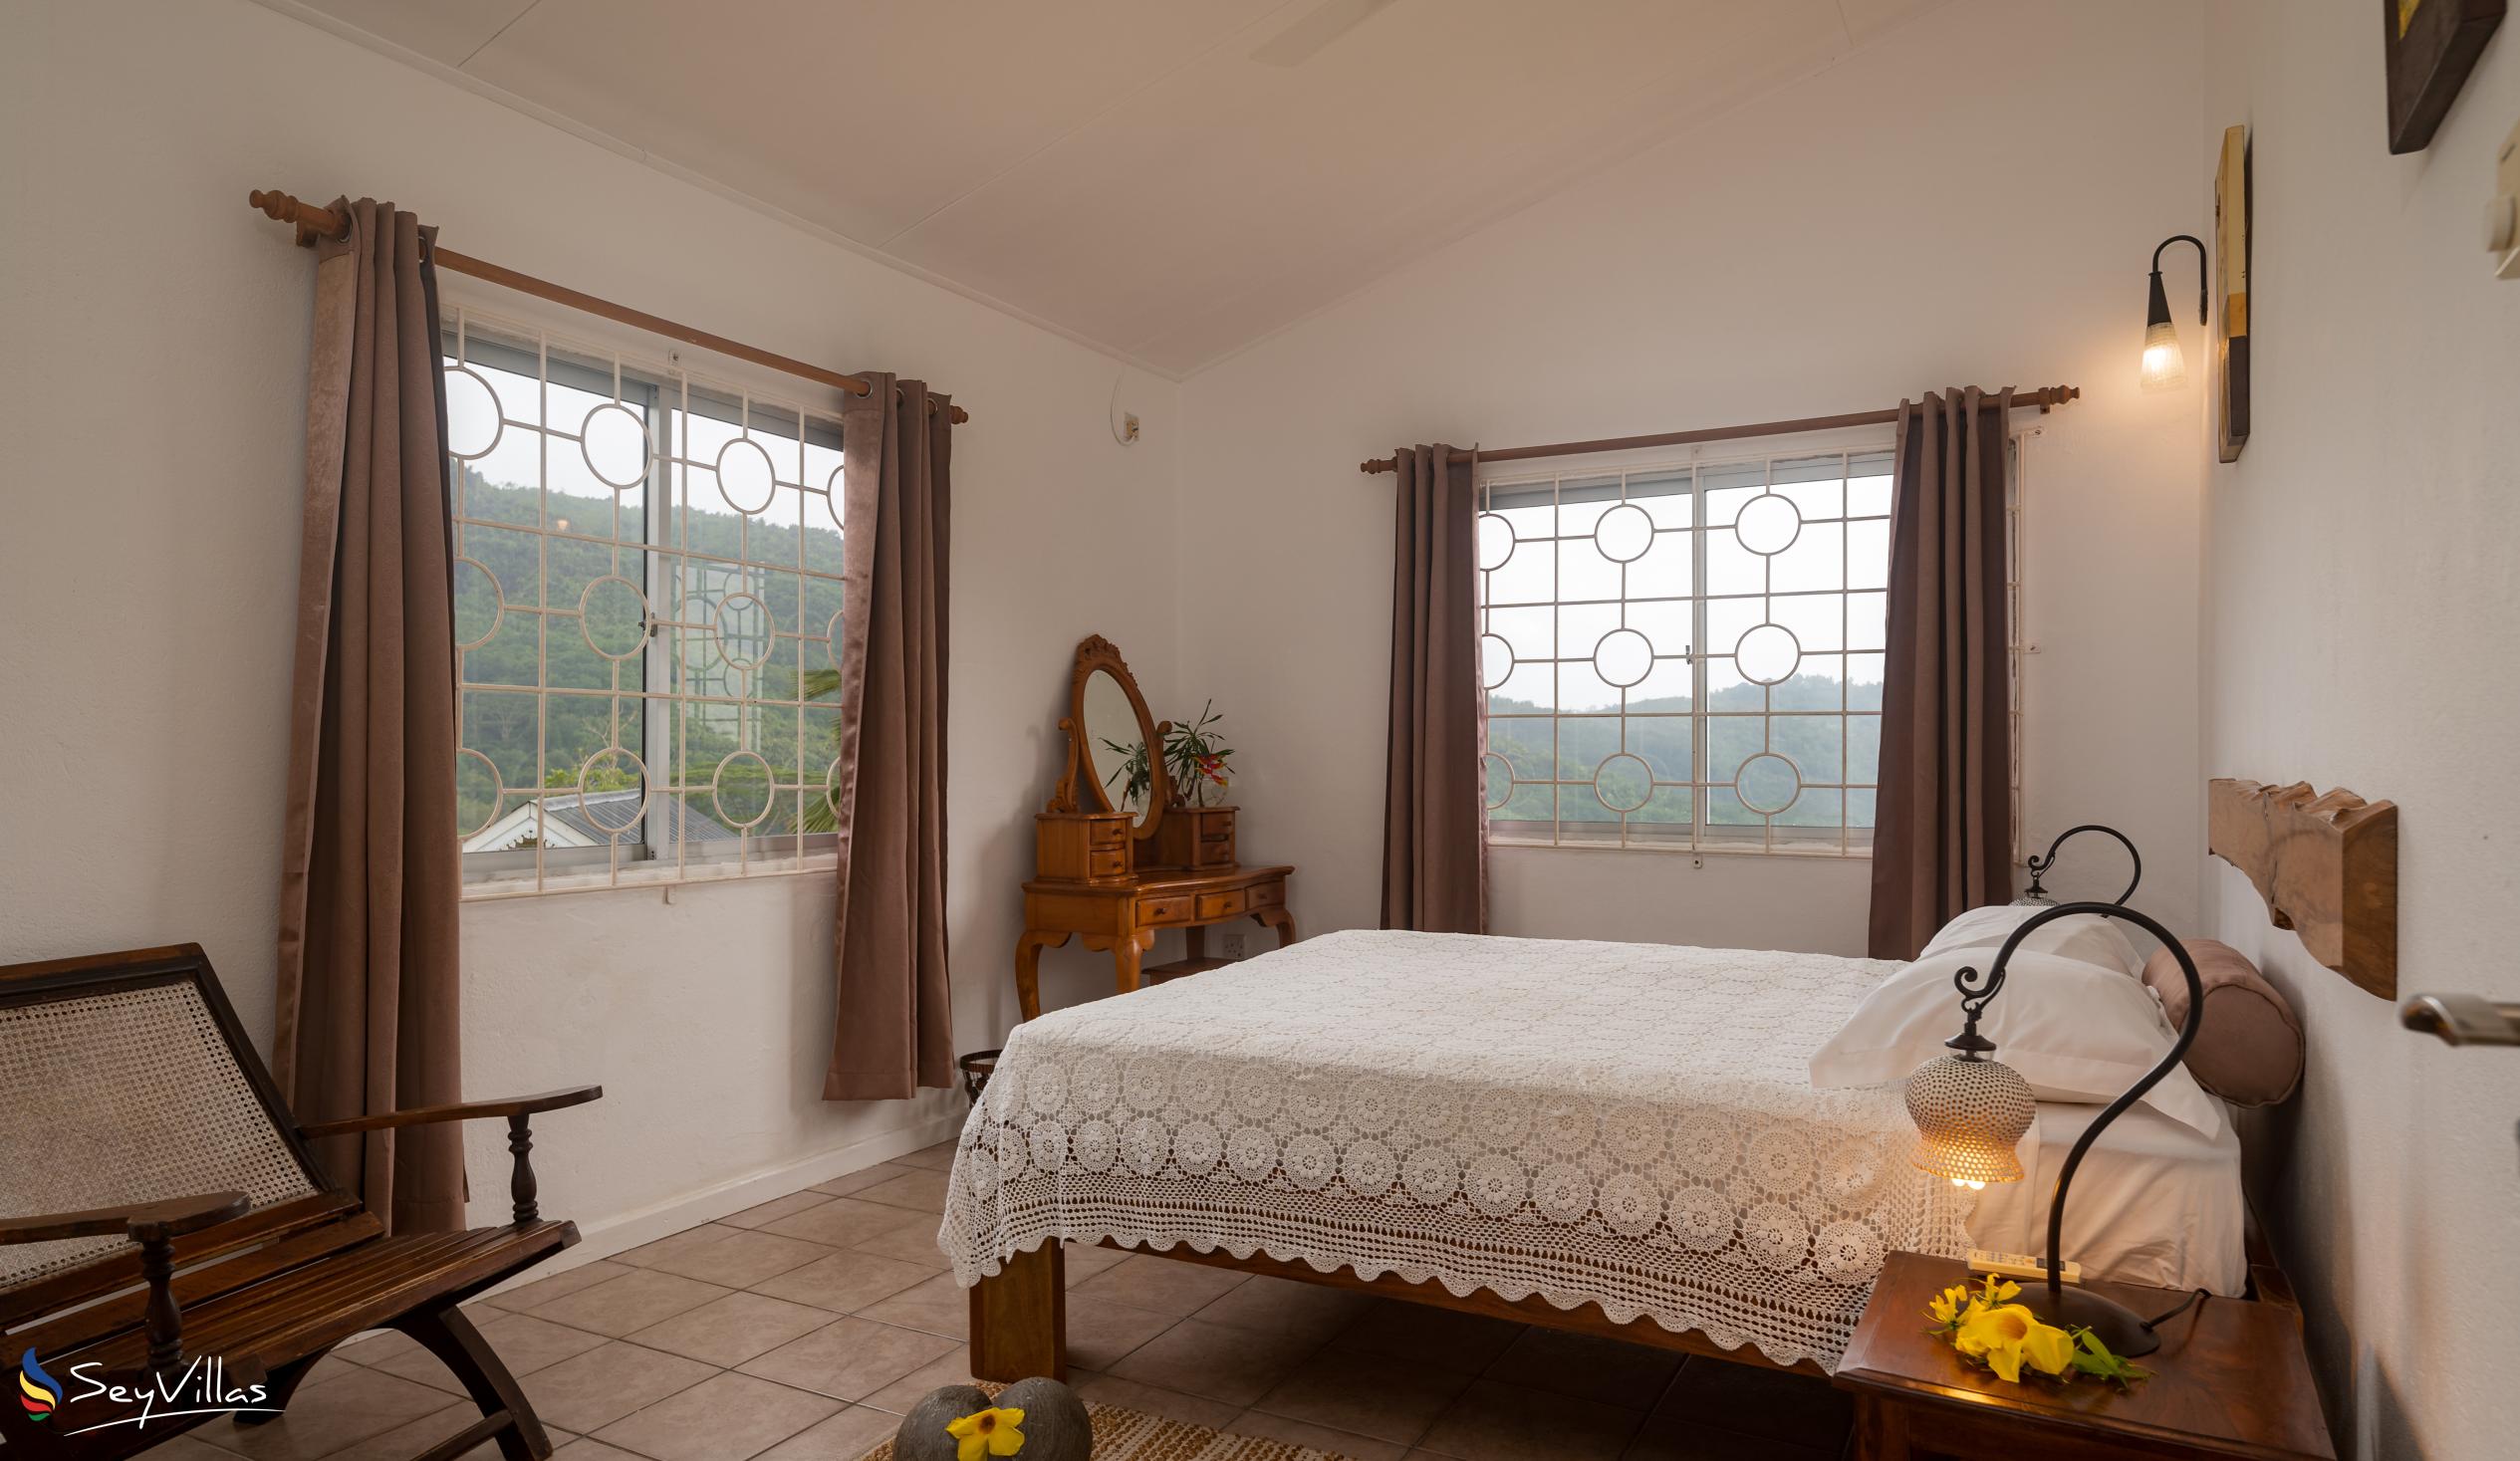 Photo 69: Residence Monte Cristo - 2-Bedroom Apartment - Mahé (Seychelles)